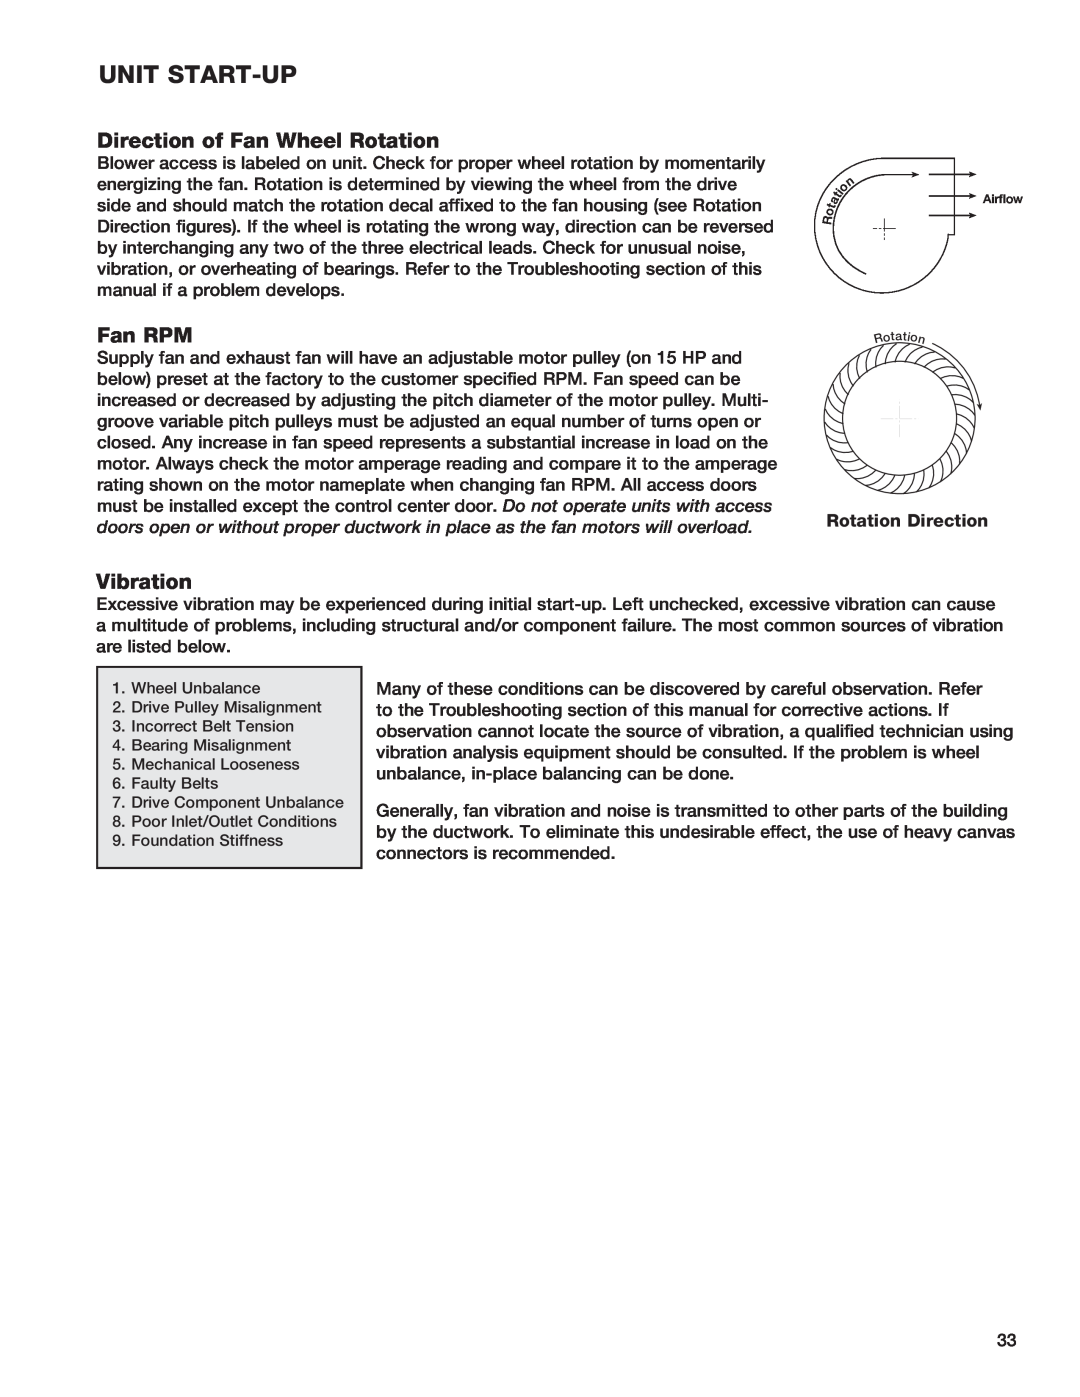 Greenheck Fan 90, HRE-20, 55, 45 manual Direction of Fan Wheel Rotation, Fan RPM, Vibration, unit start-up, Rotation Direction 